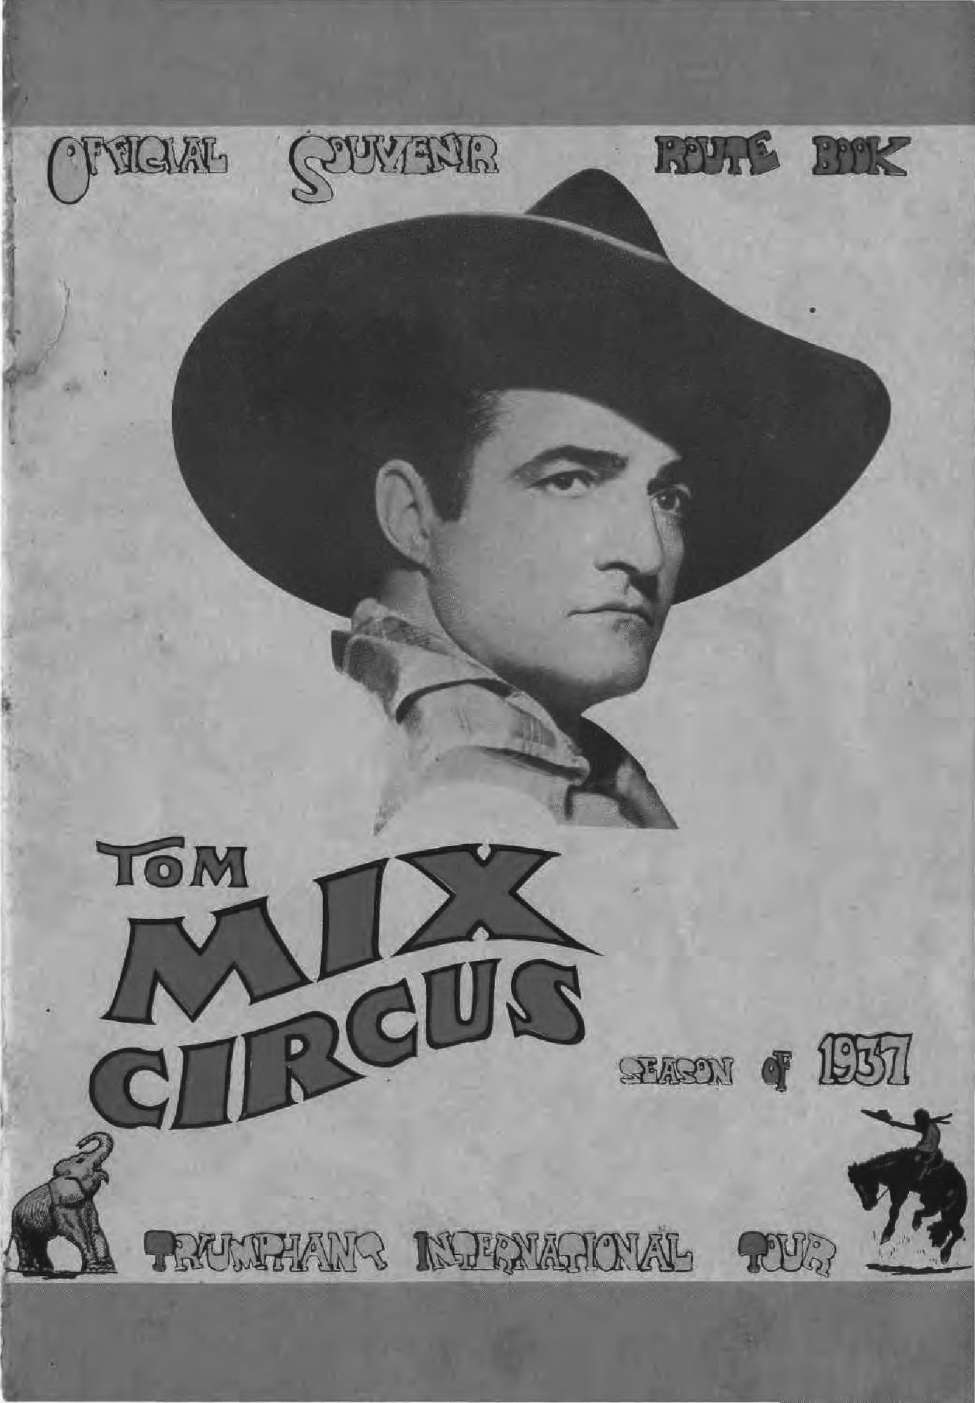 Comic Book Cover For Tom Mix Circus Souvenir Route Book - 1937